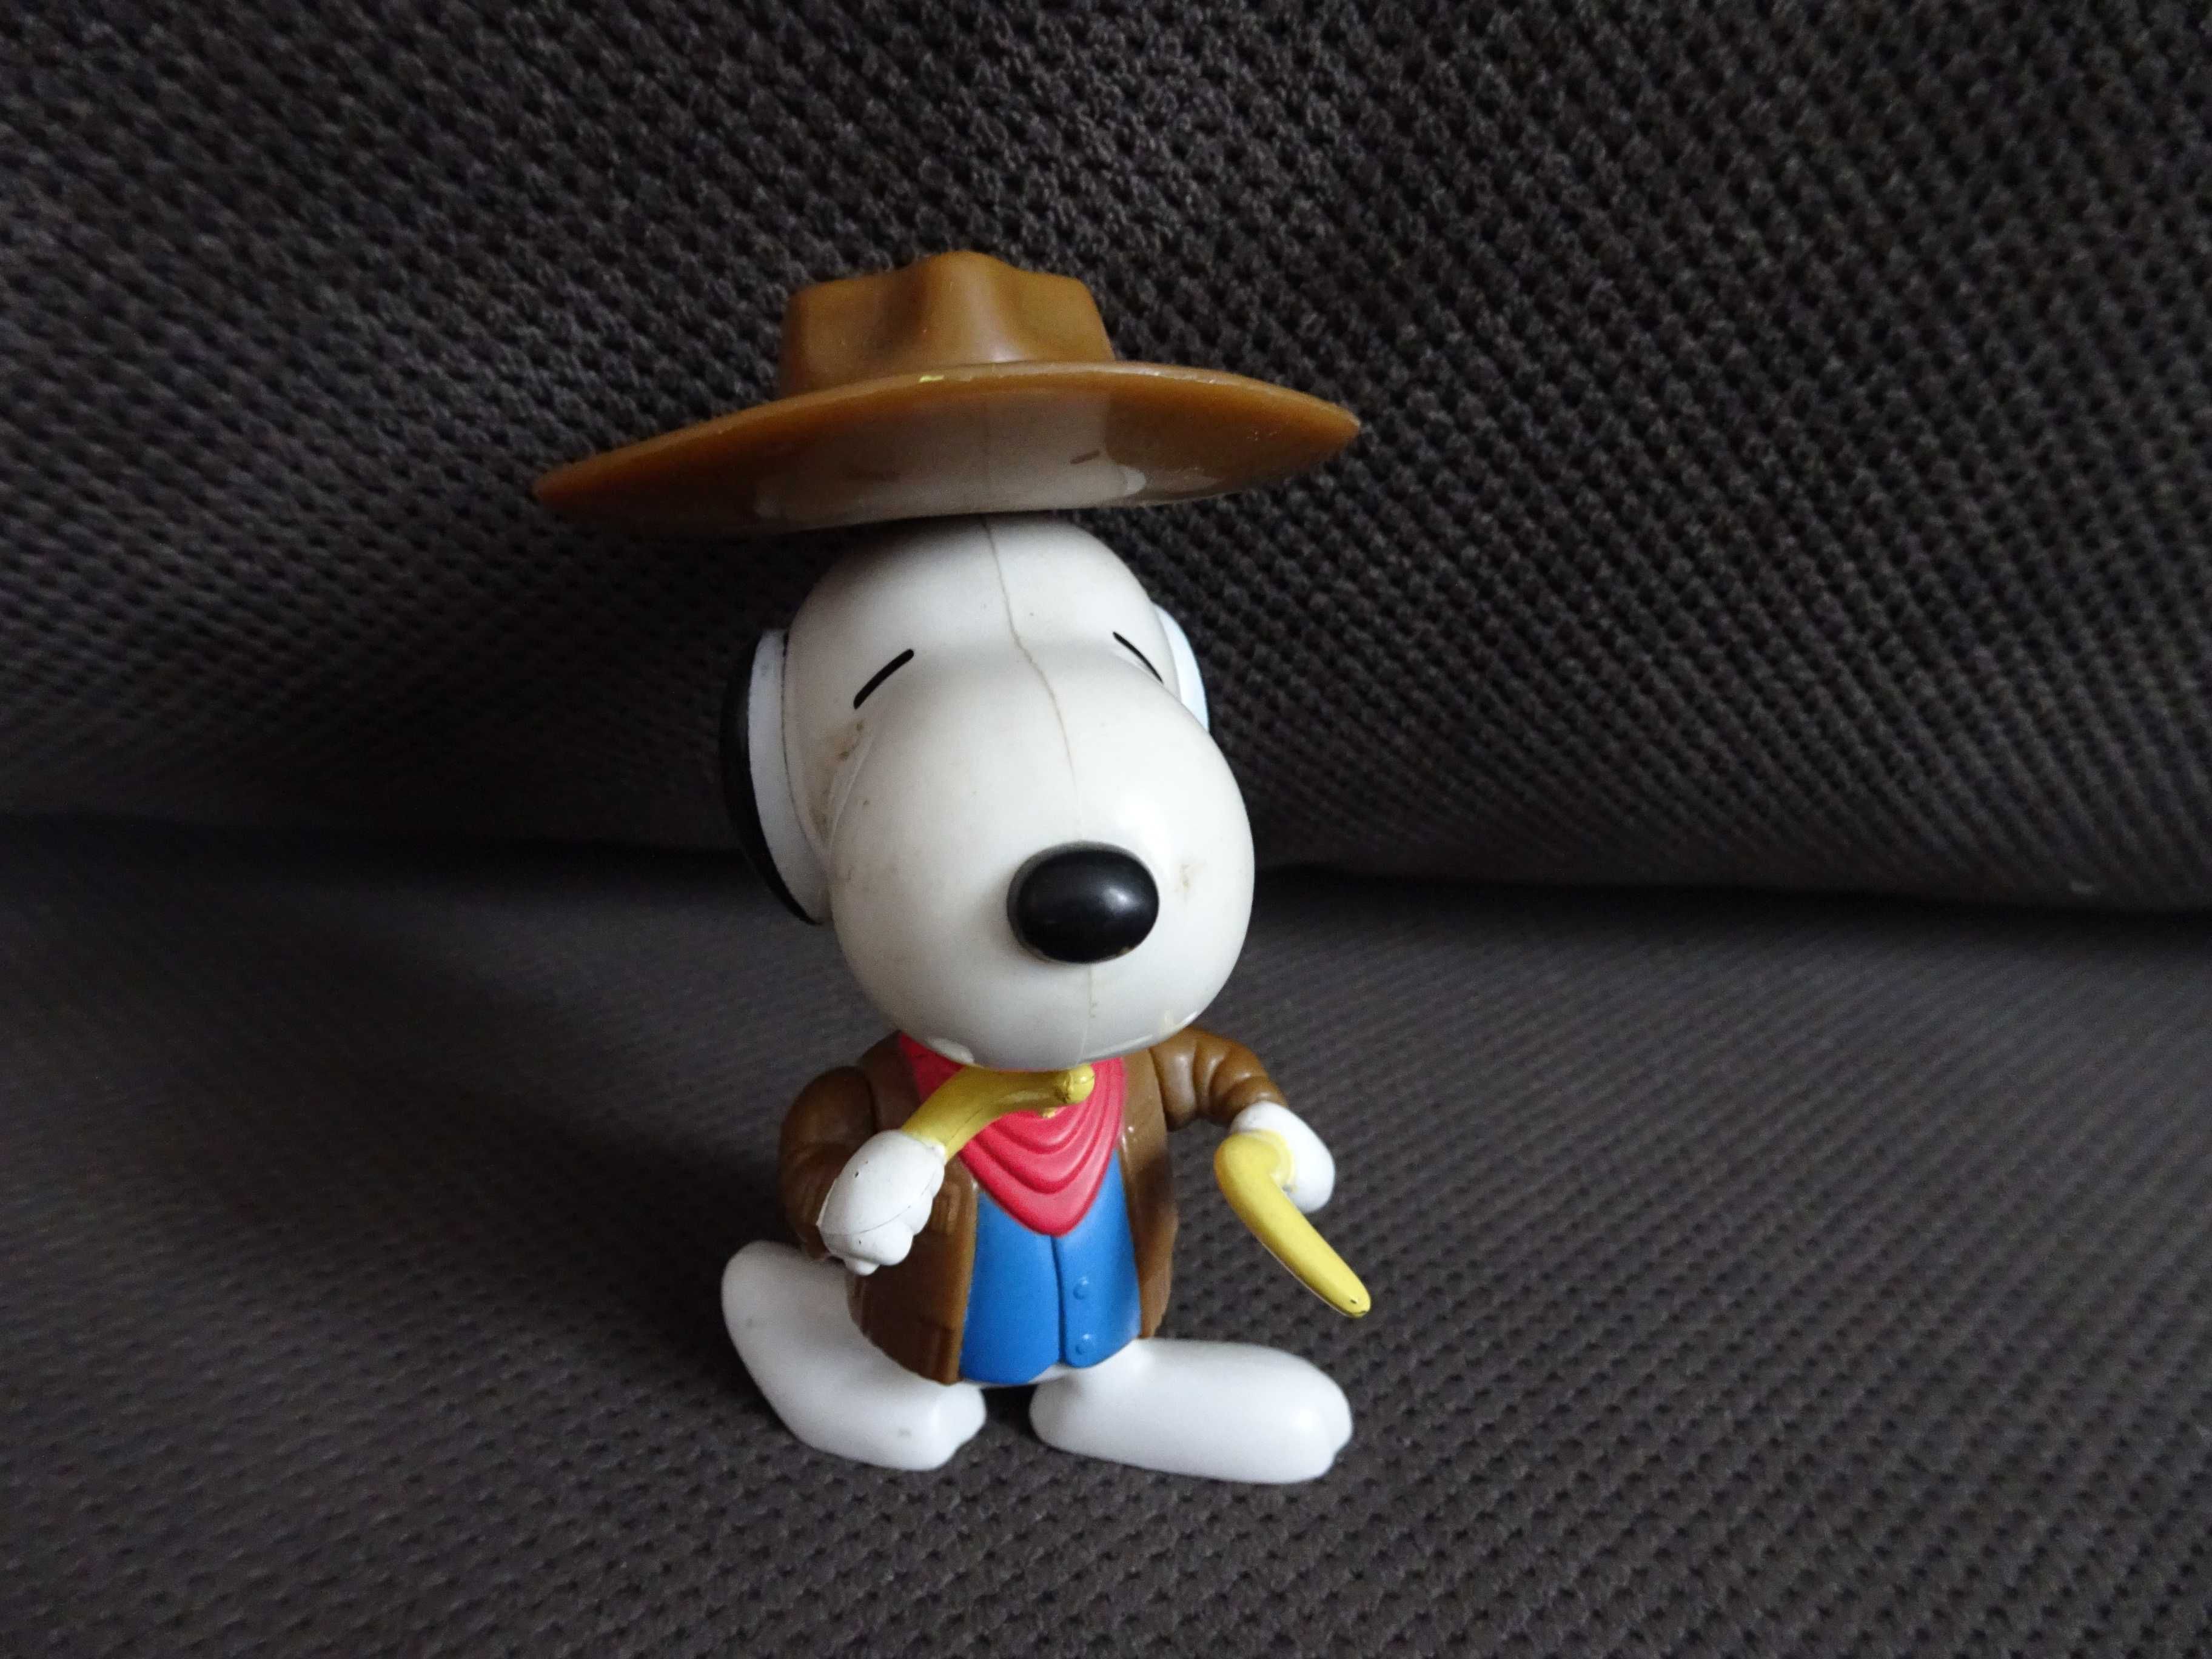 Figurka Snoopy z kolekcji McDonald's